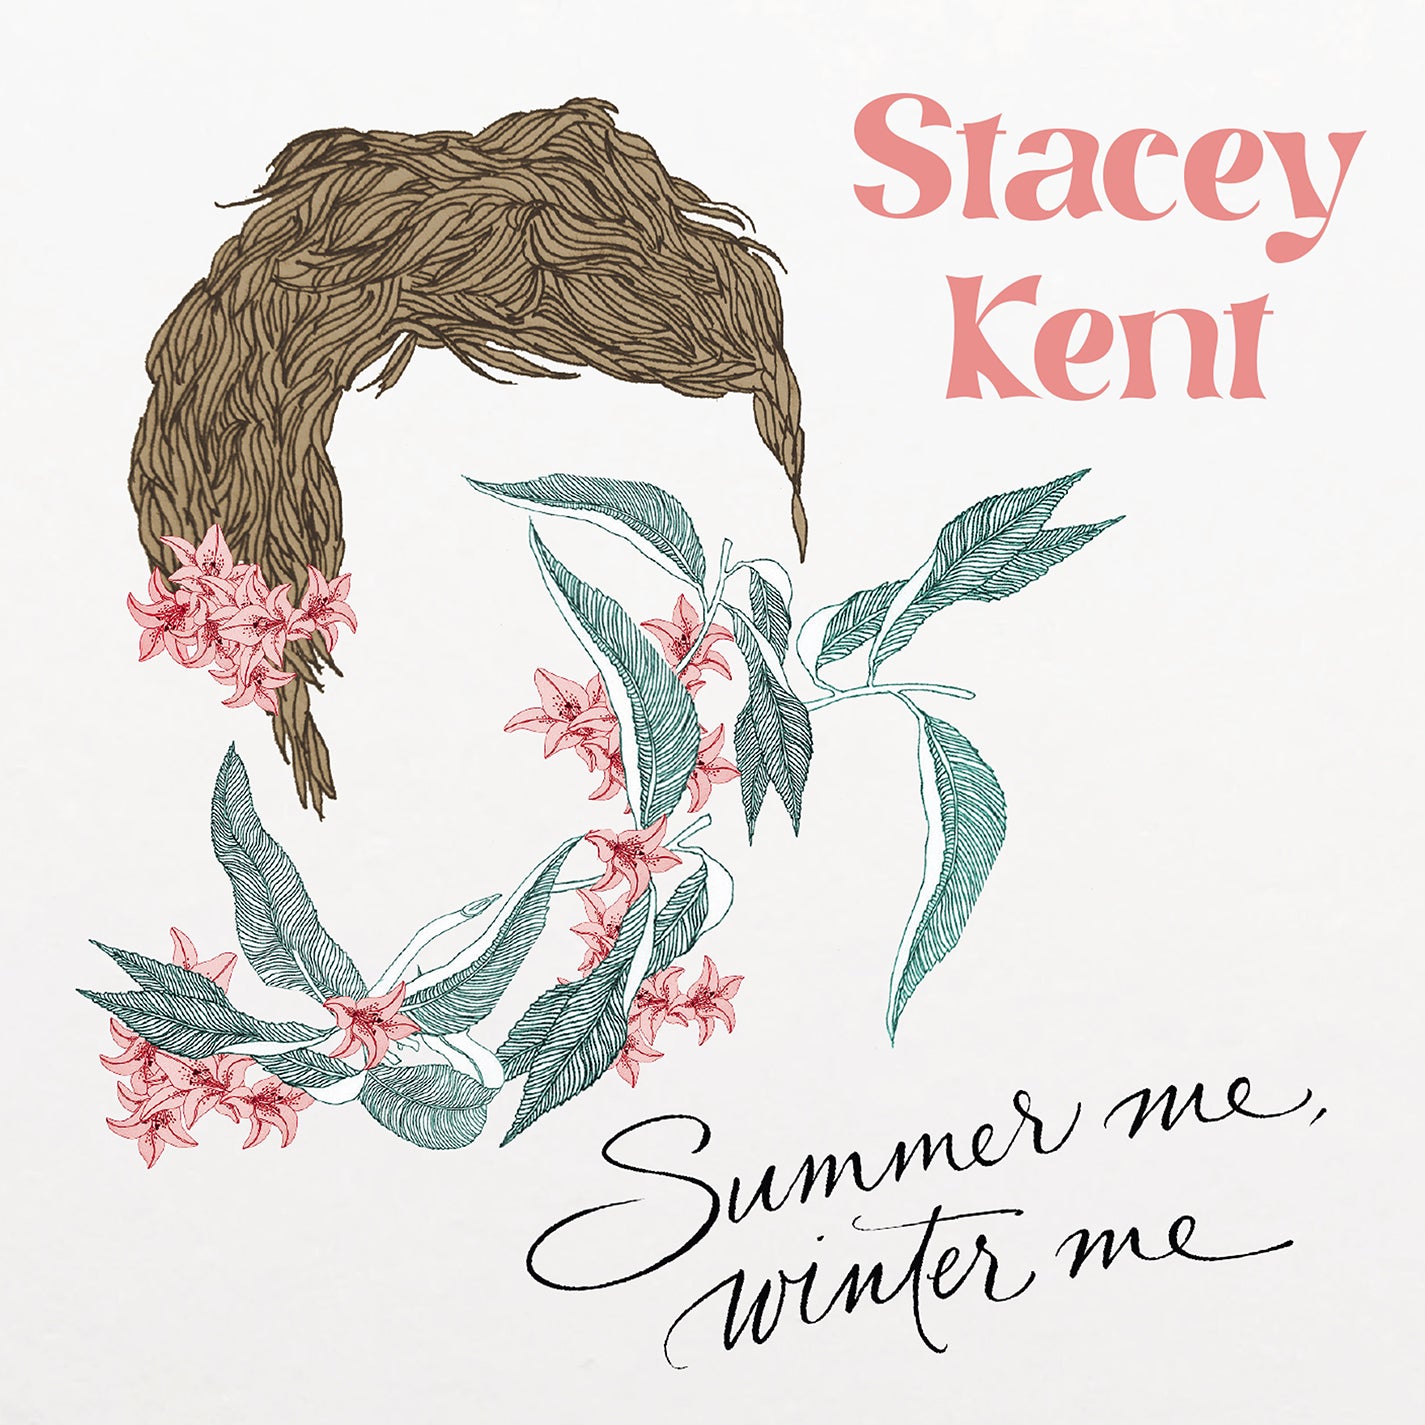 Summer Me, Winter Me / Stacey Kent